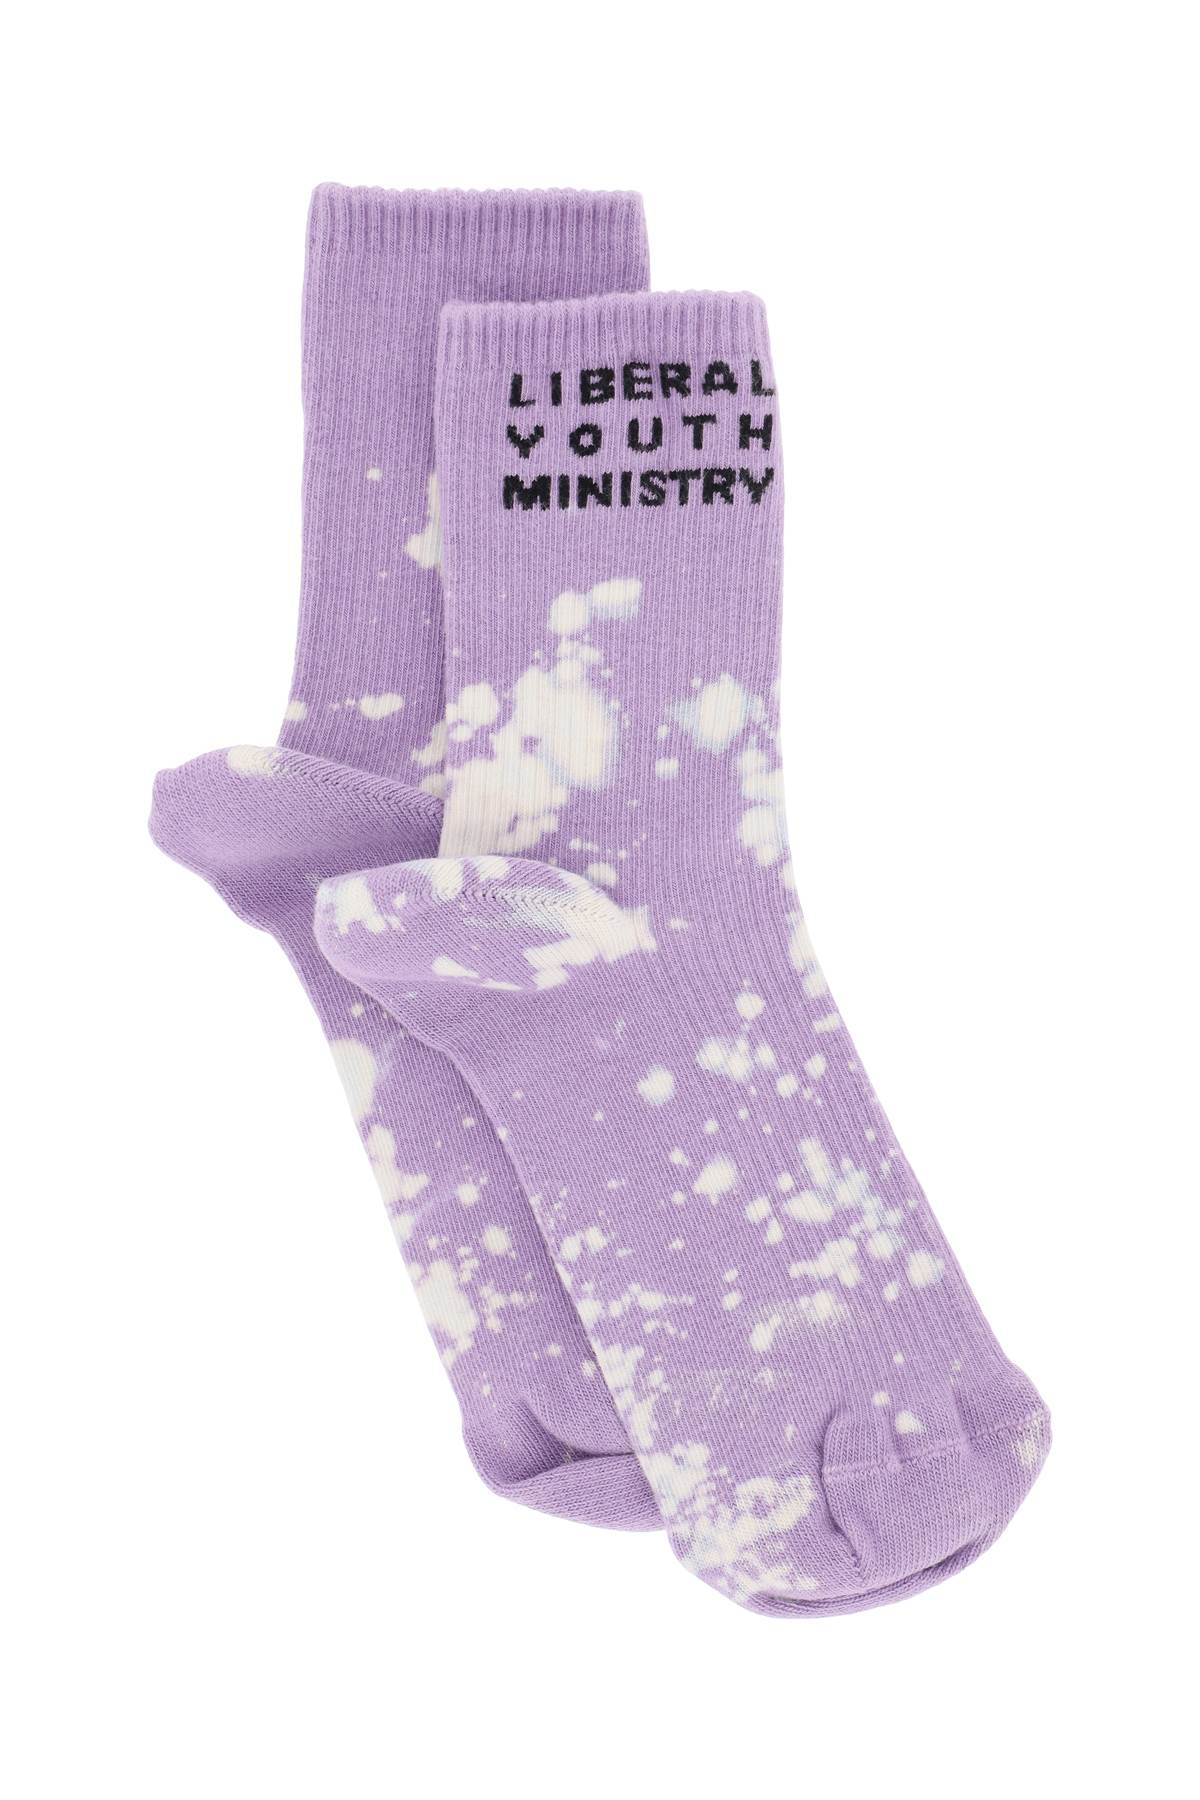 Liberal youth ministry logo sport socks LYM01K002 LILAC 2